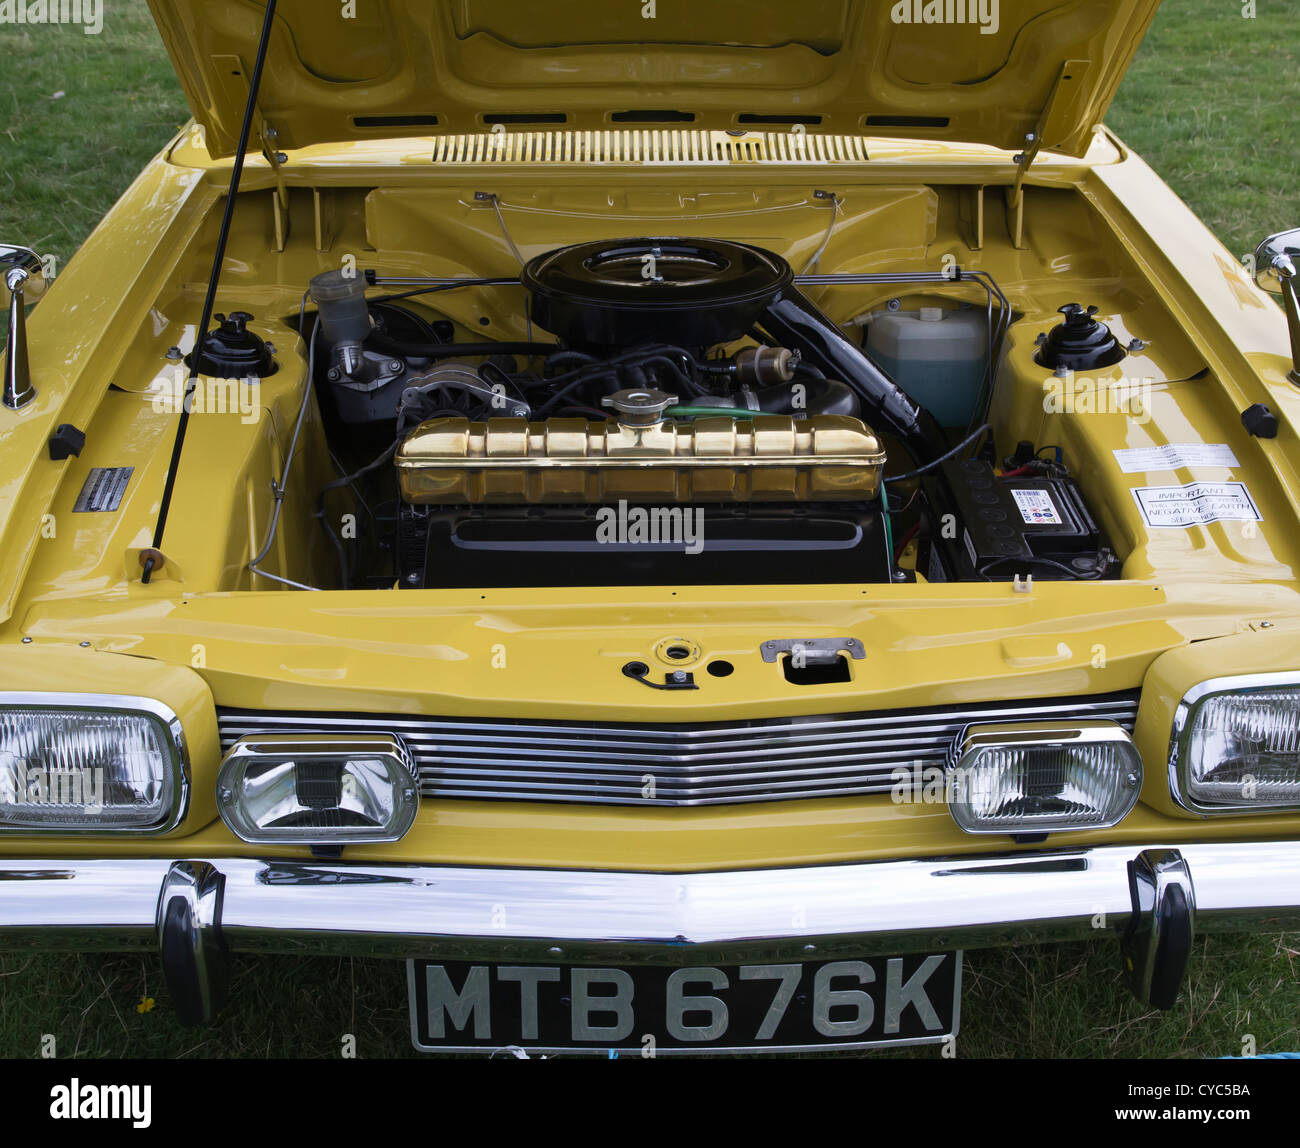 mk1 ford capri v6 3000e engine Stock Photo - Alamy